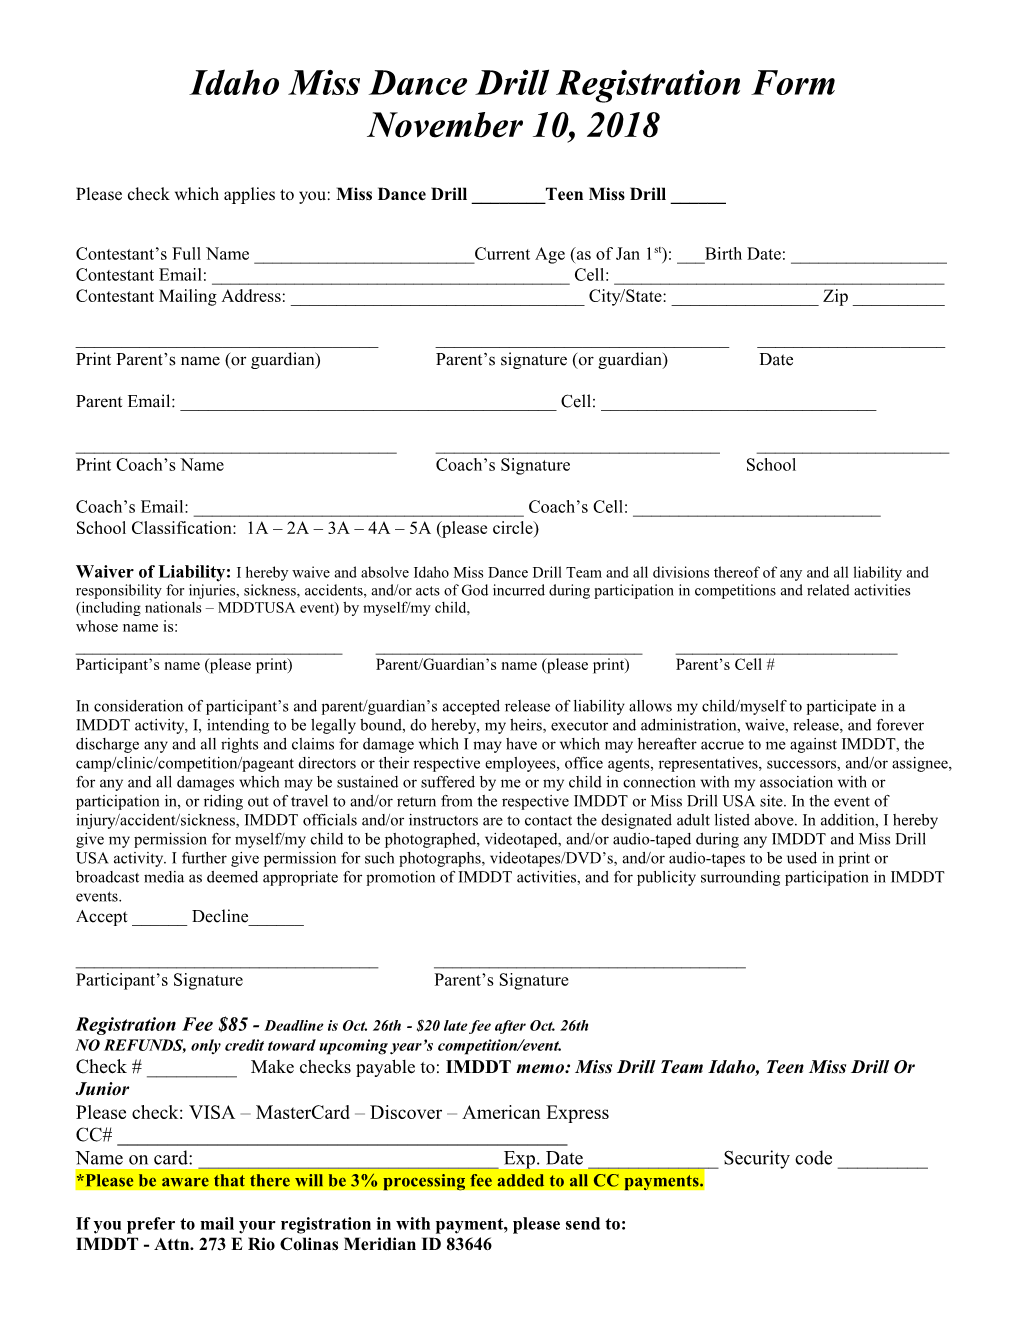 Idaho Miss Dance Drill Registration Form